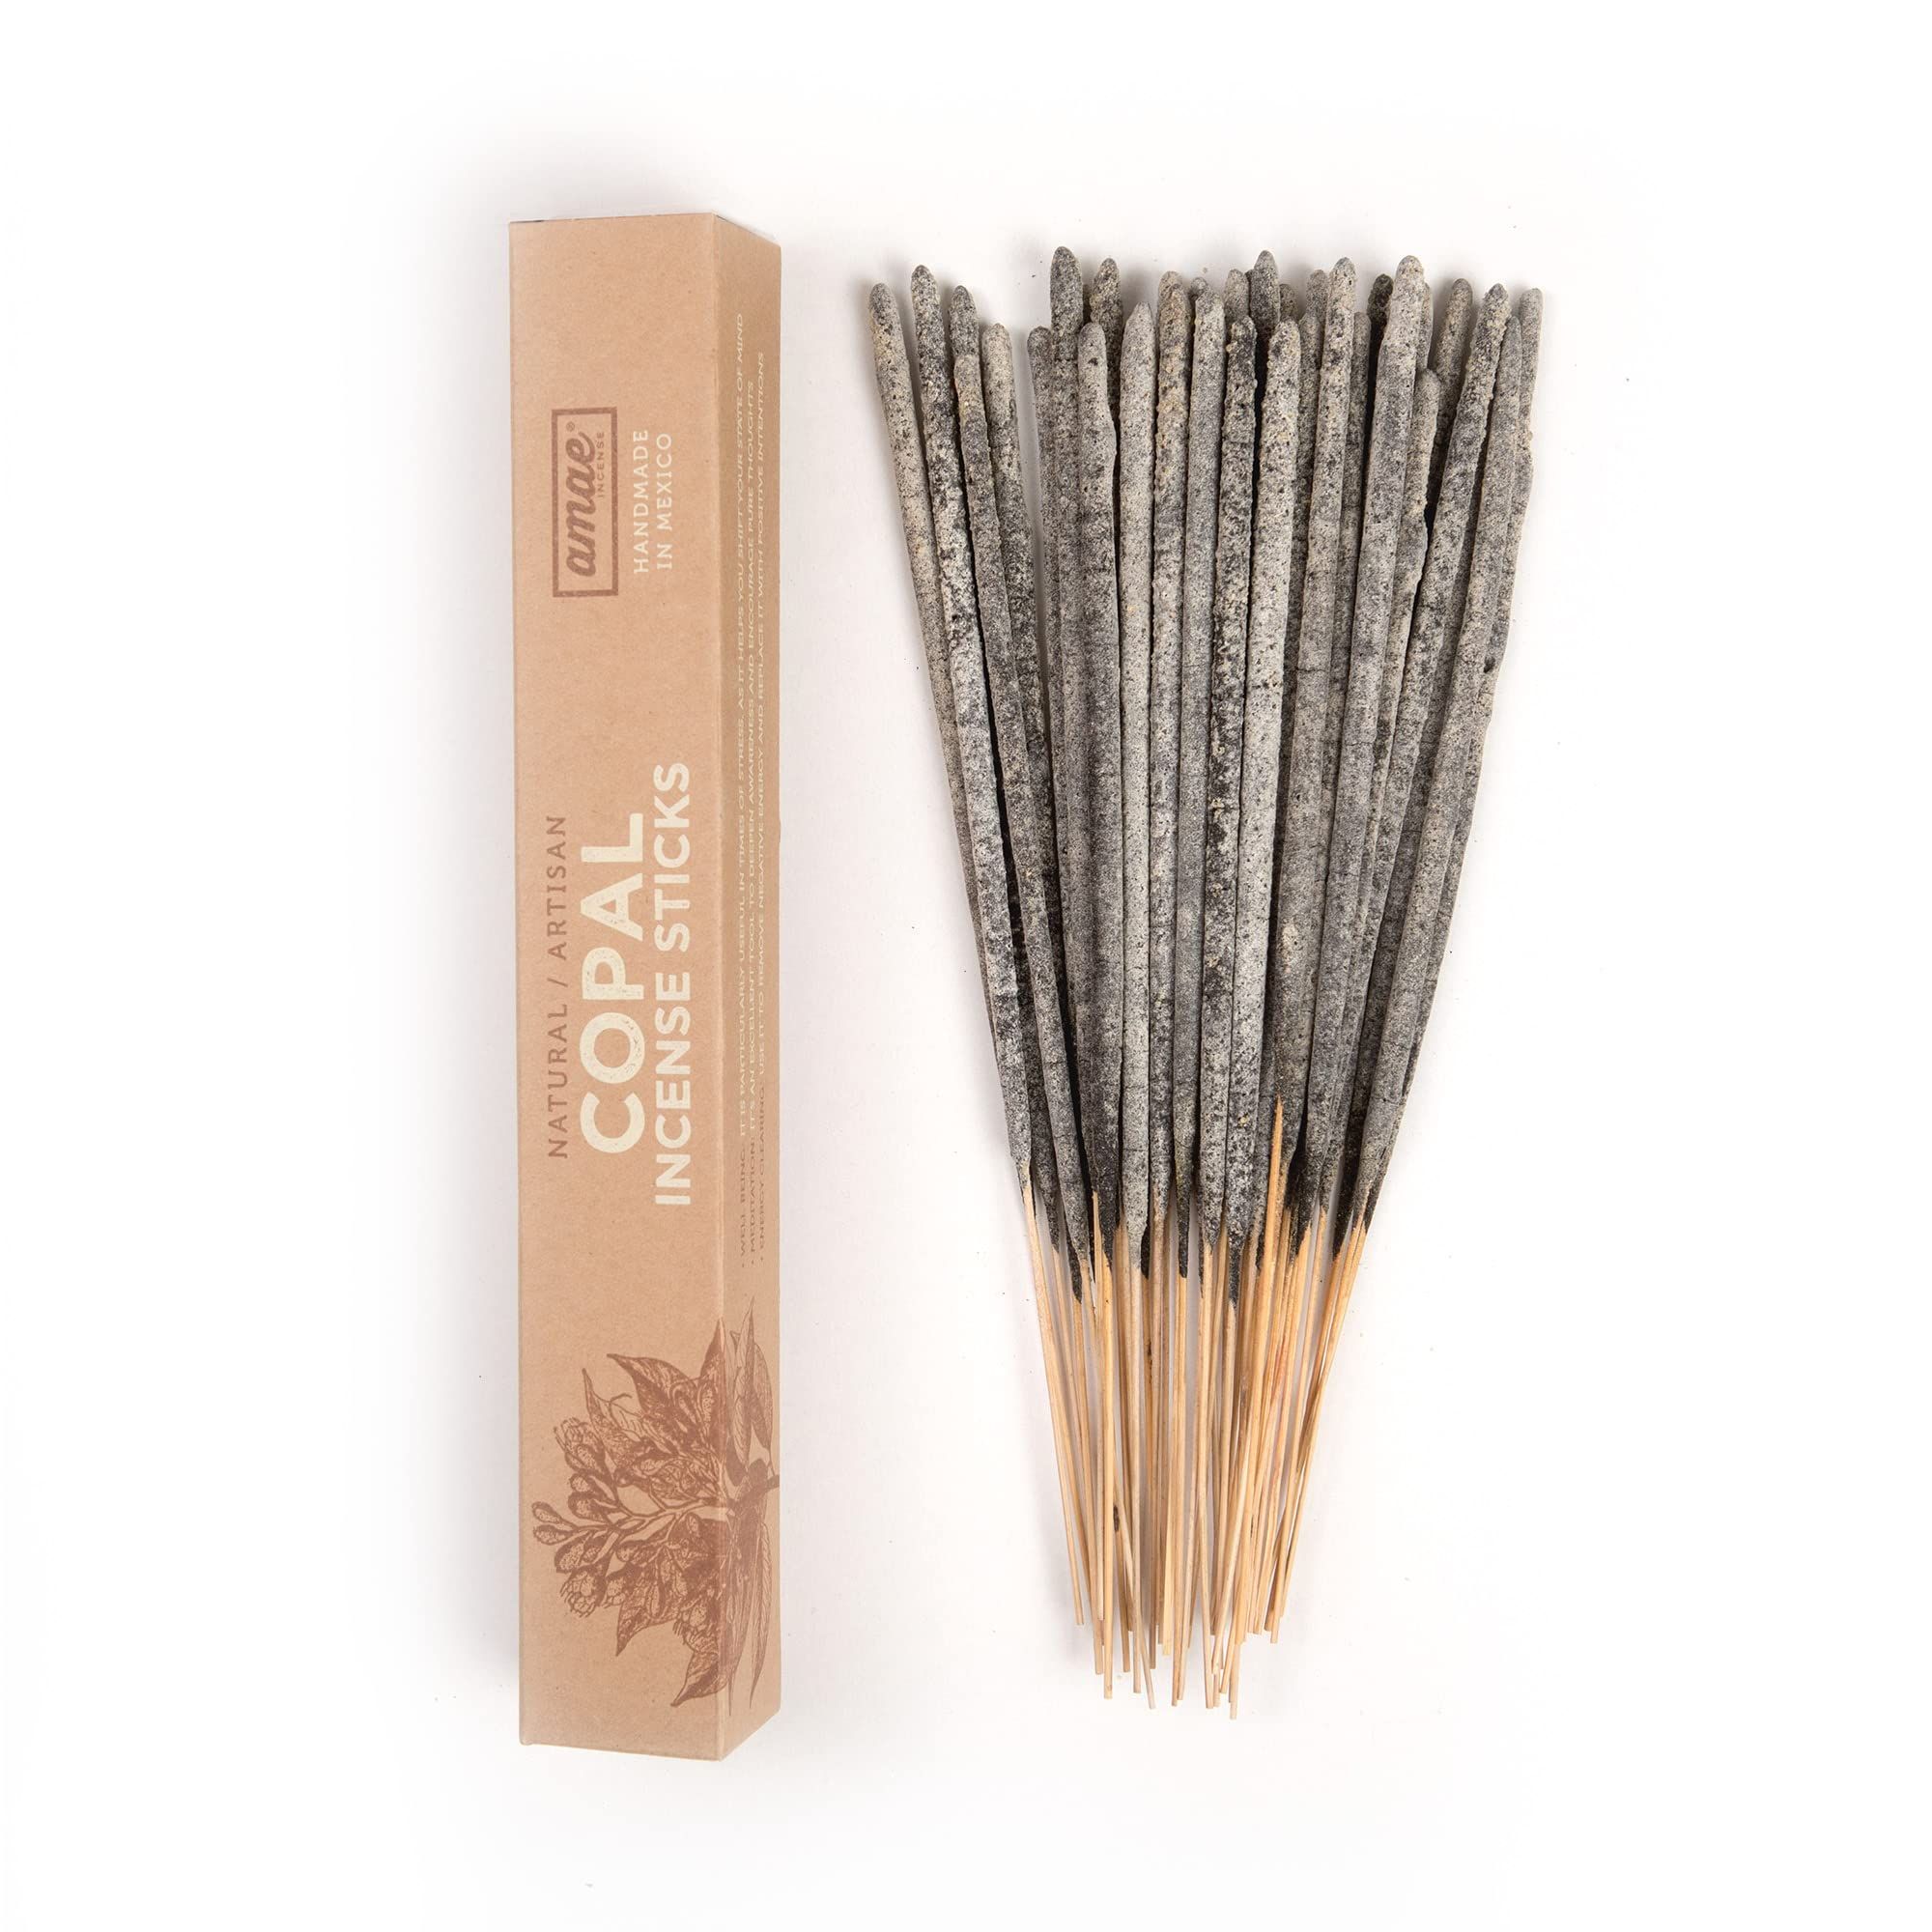 Copal Incense 40 Sticks: Big Bag | Amazon (US)